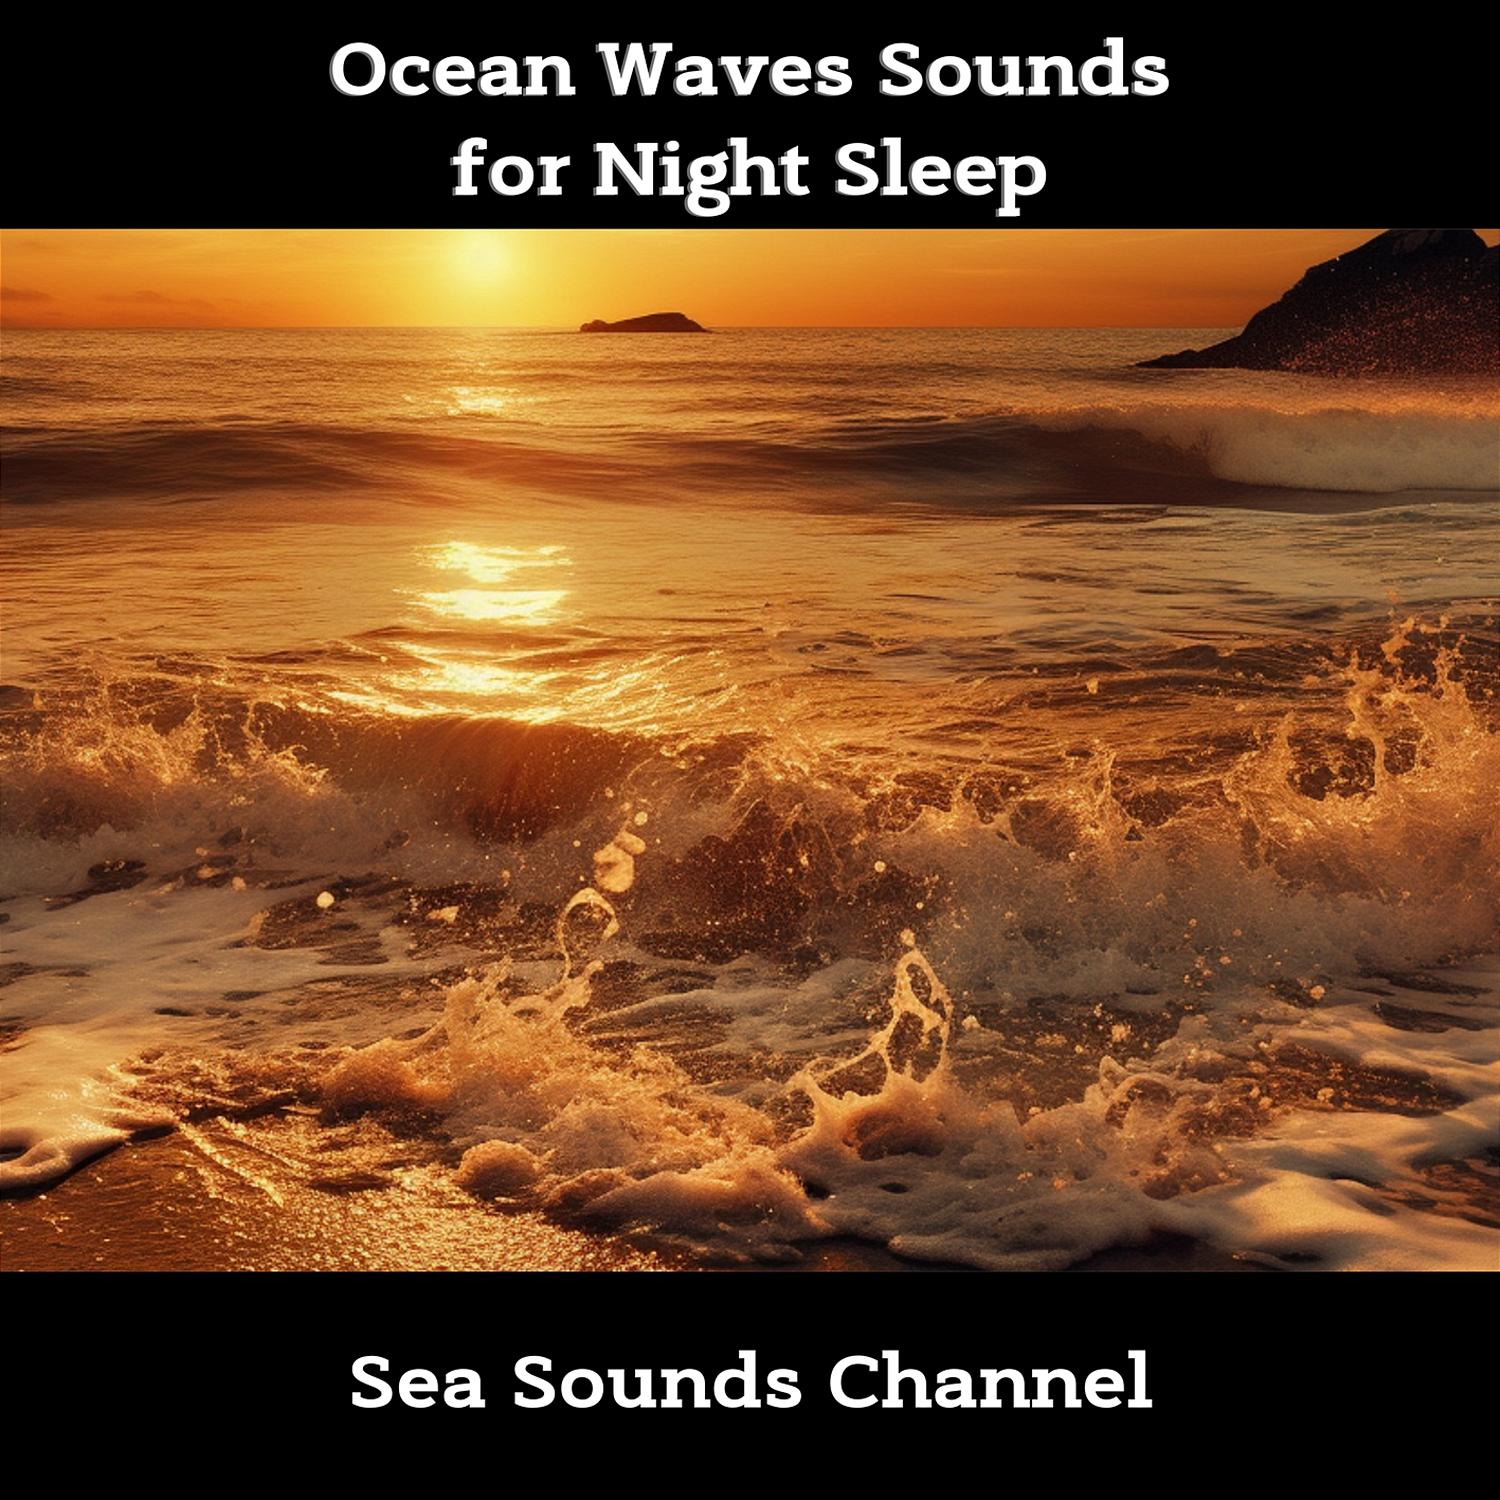 Sea Sounds Channel - Winter Oceans